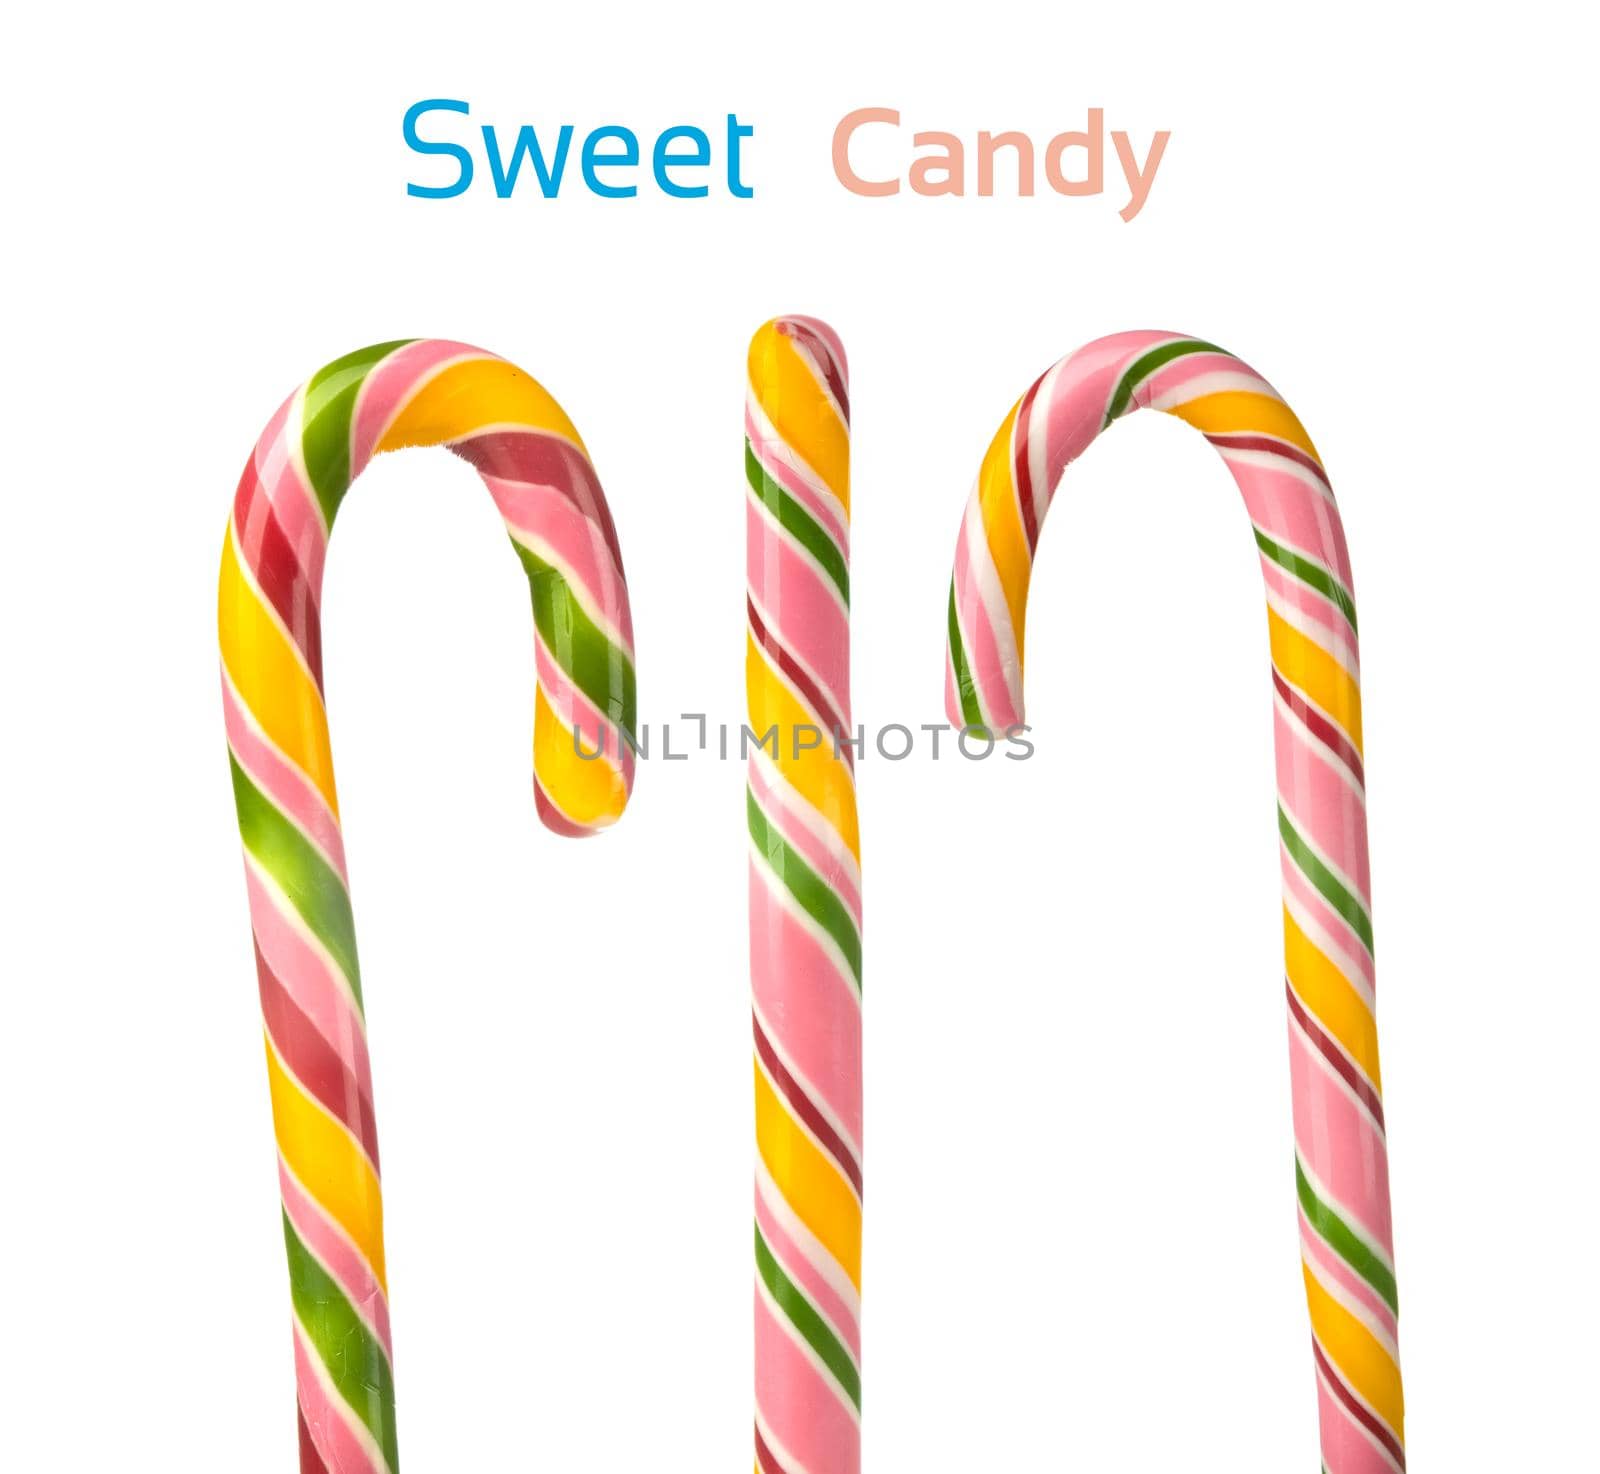 sweet candy by kornienko